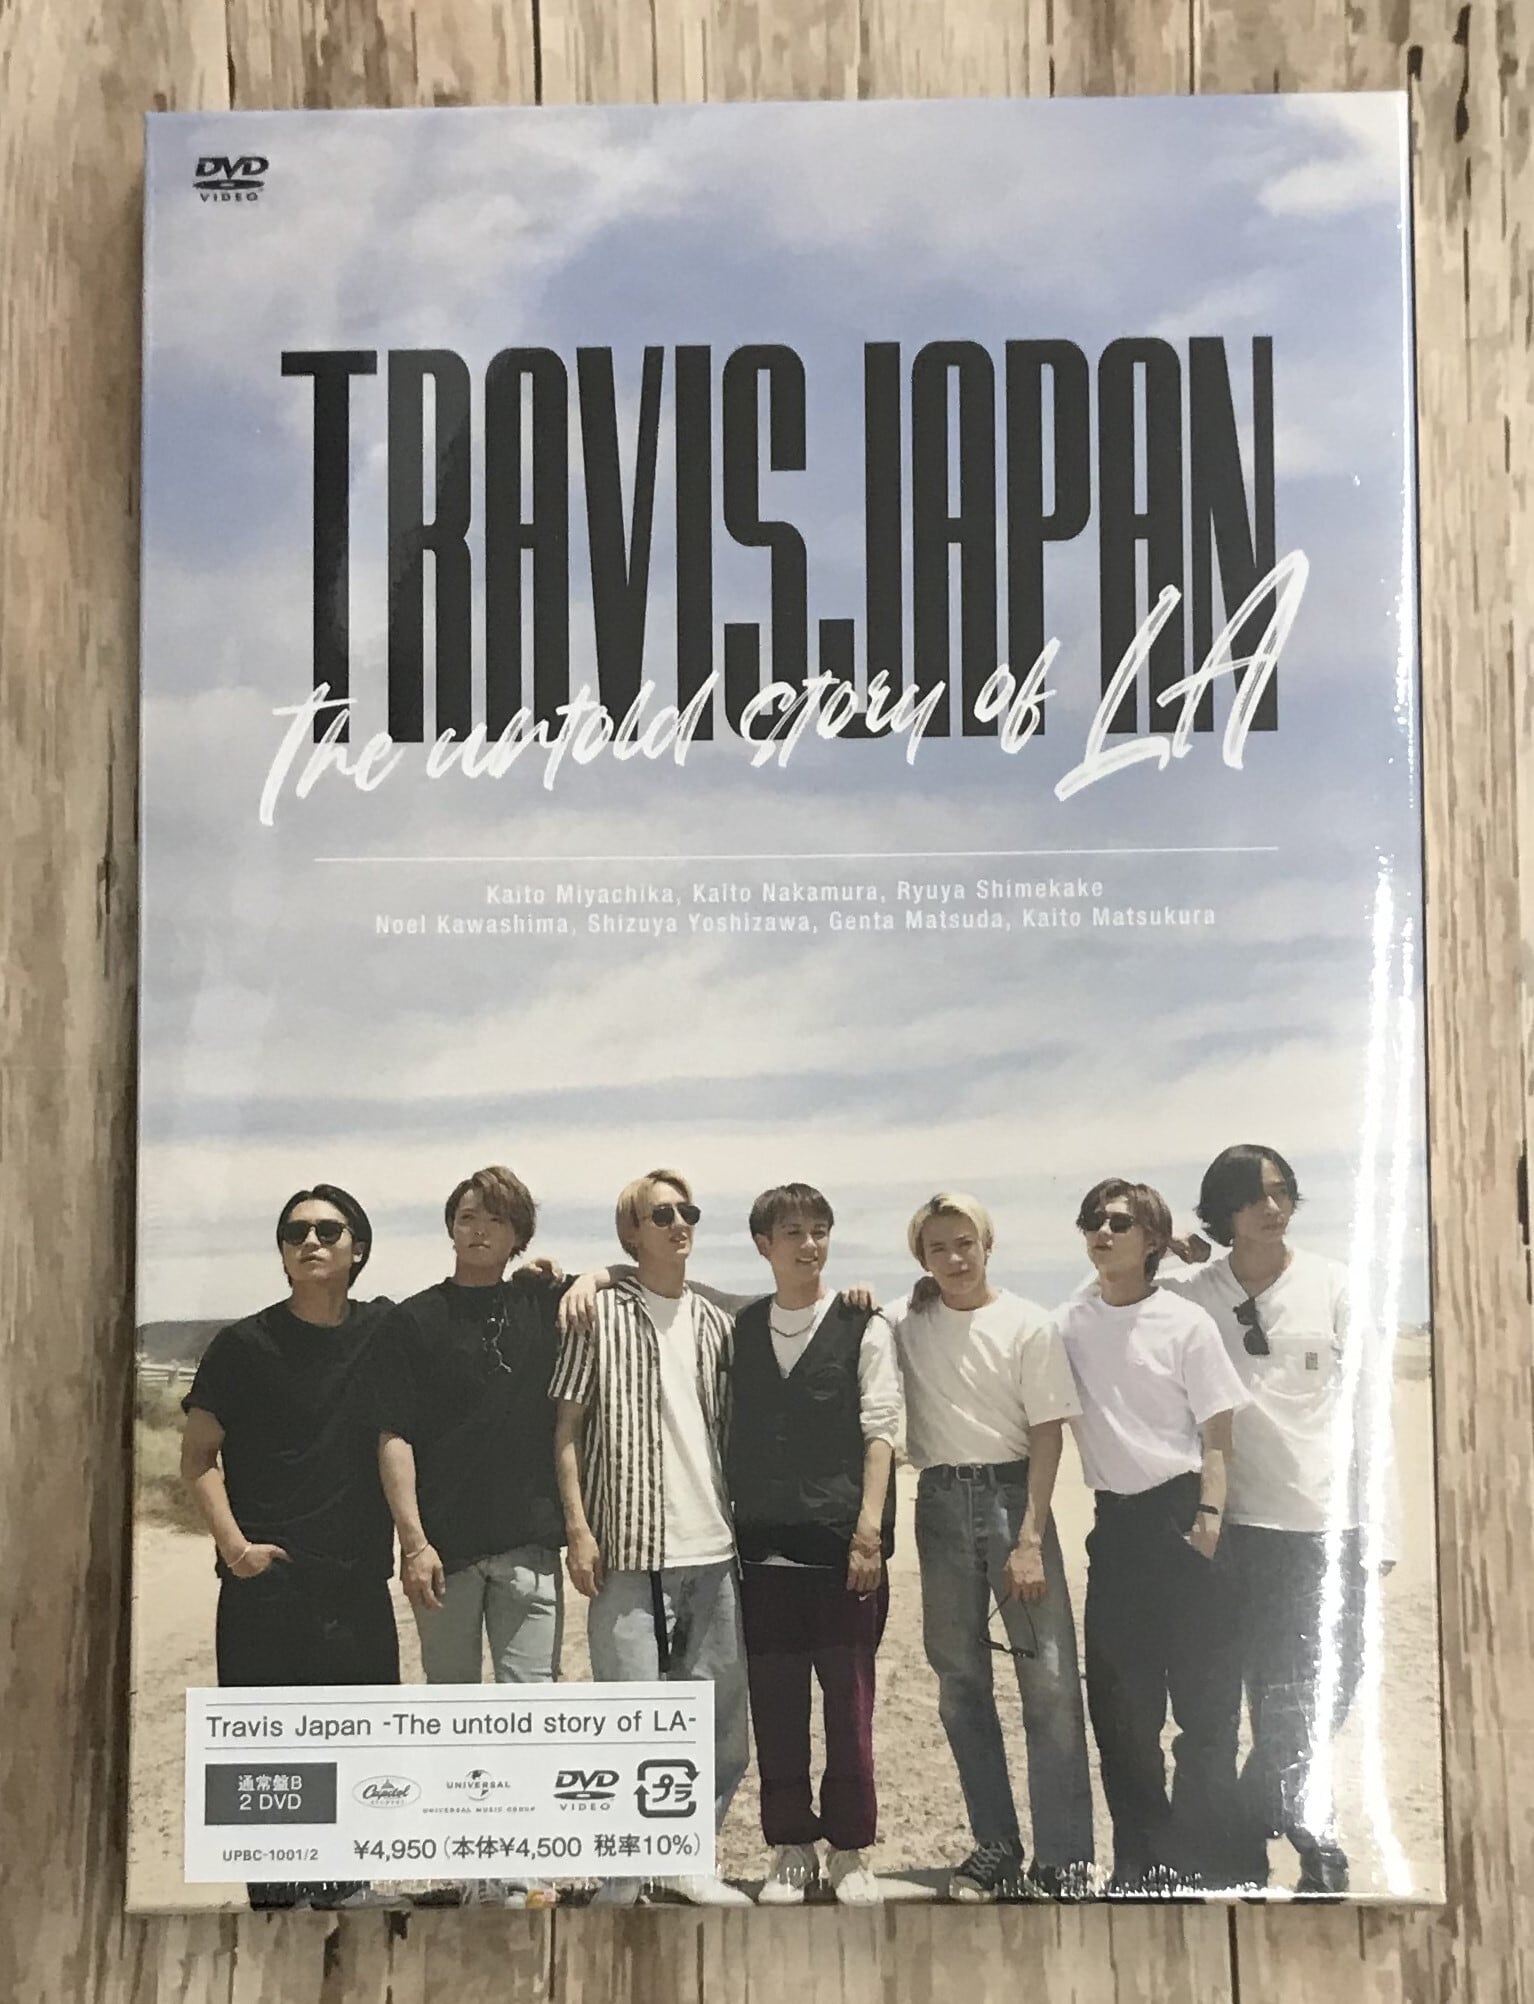 Travis Japan-The untold story of LA-